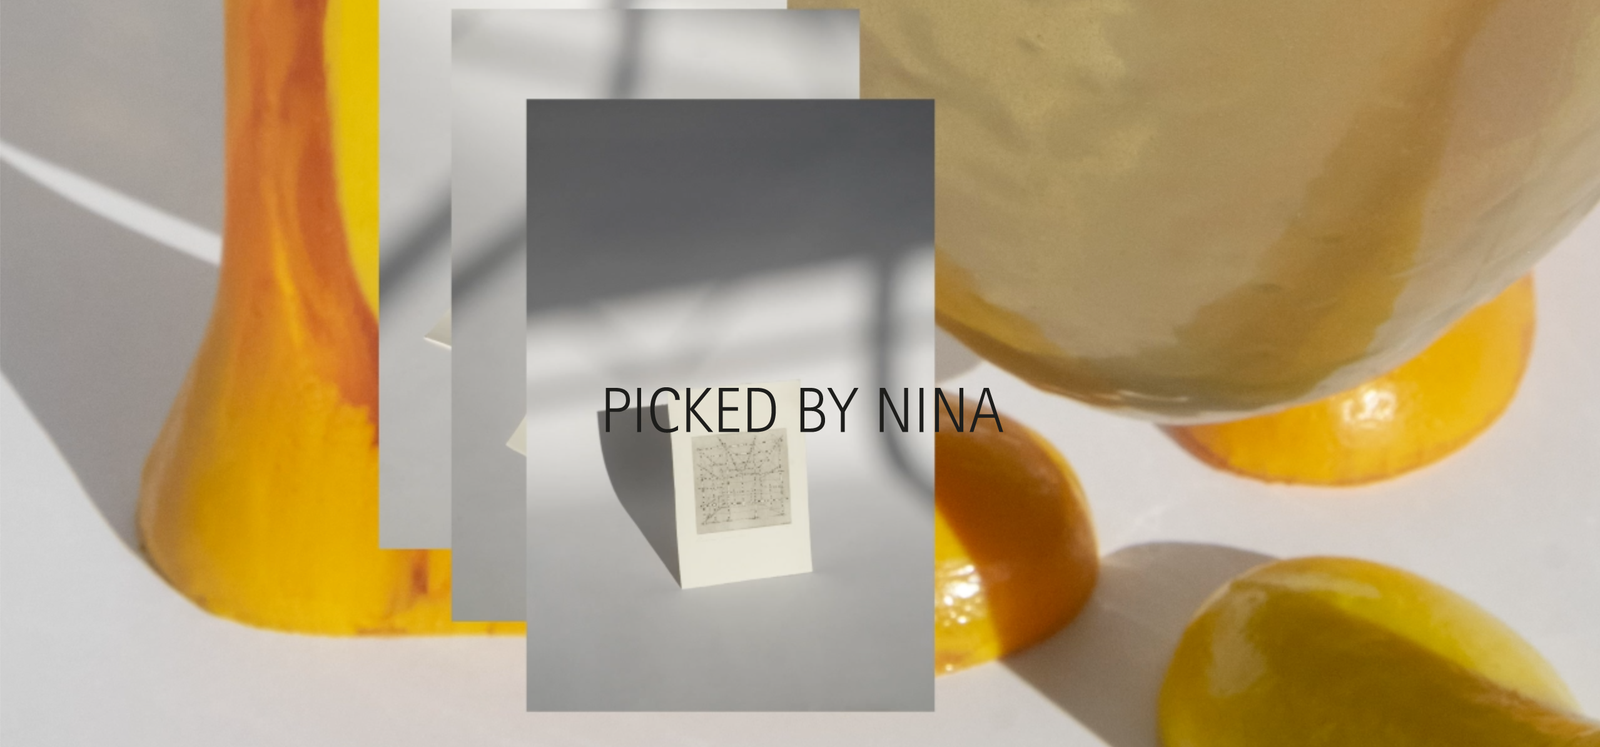 Picked by Nina платформа с коллекционным дизайном от галереи Nilufar